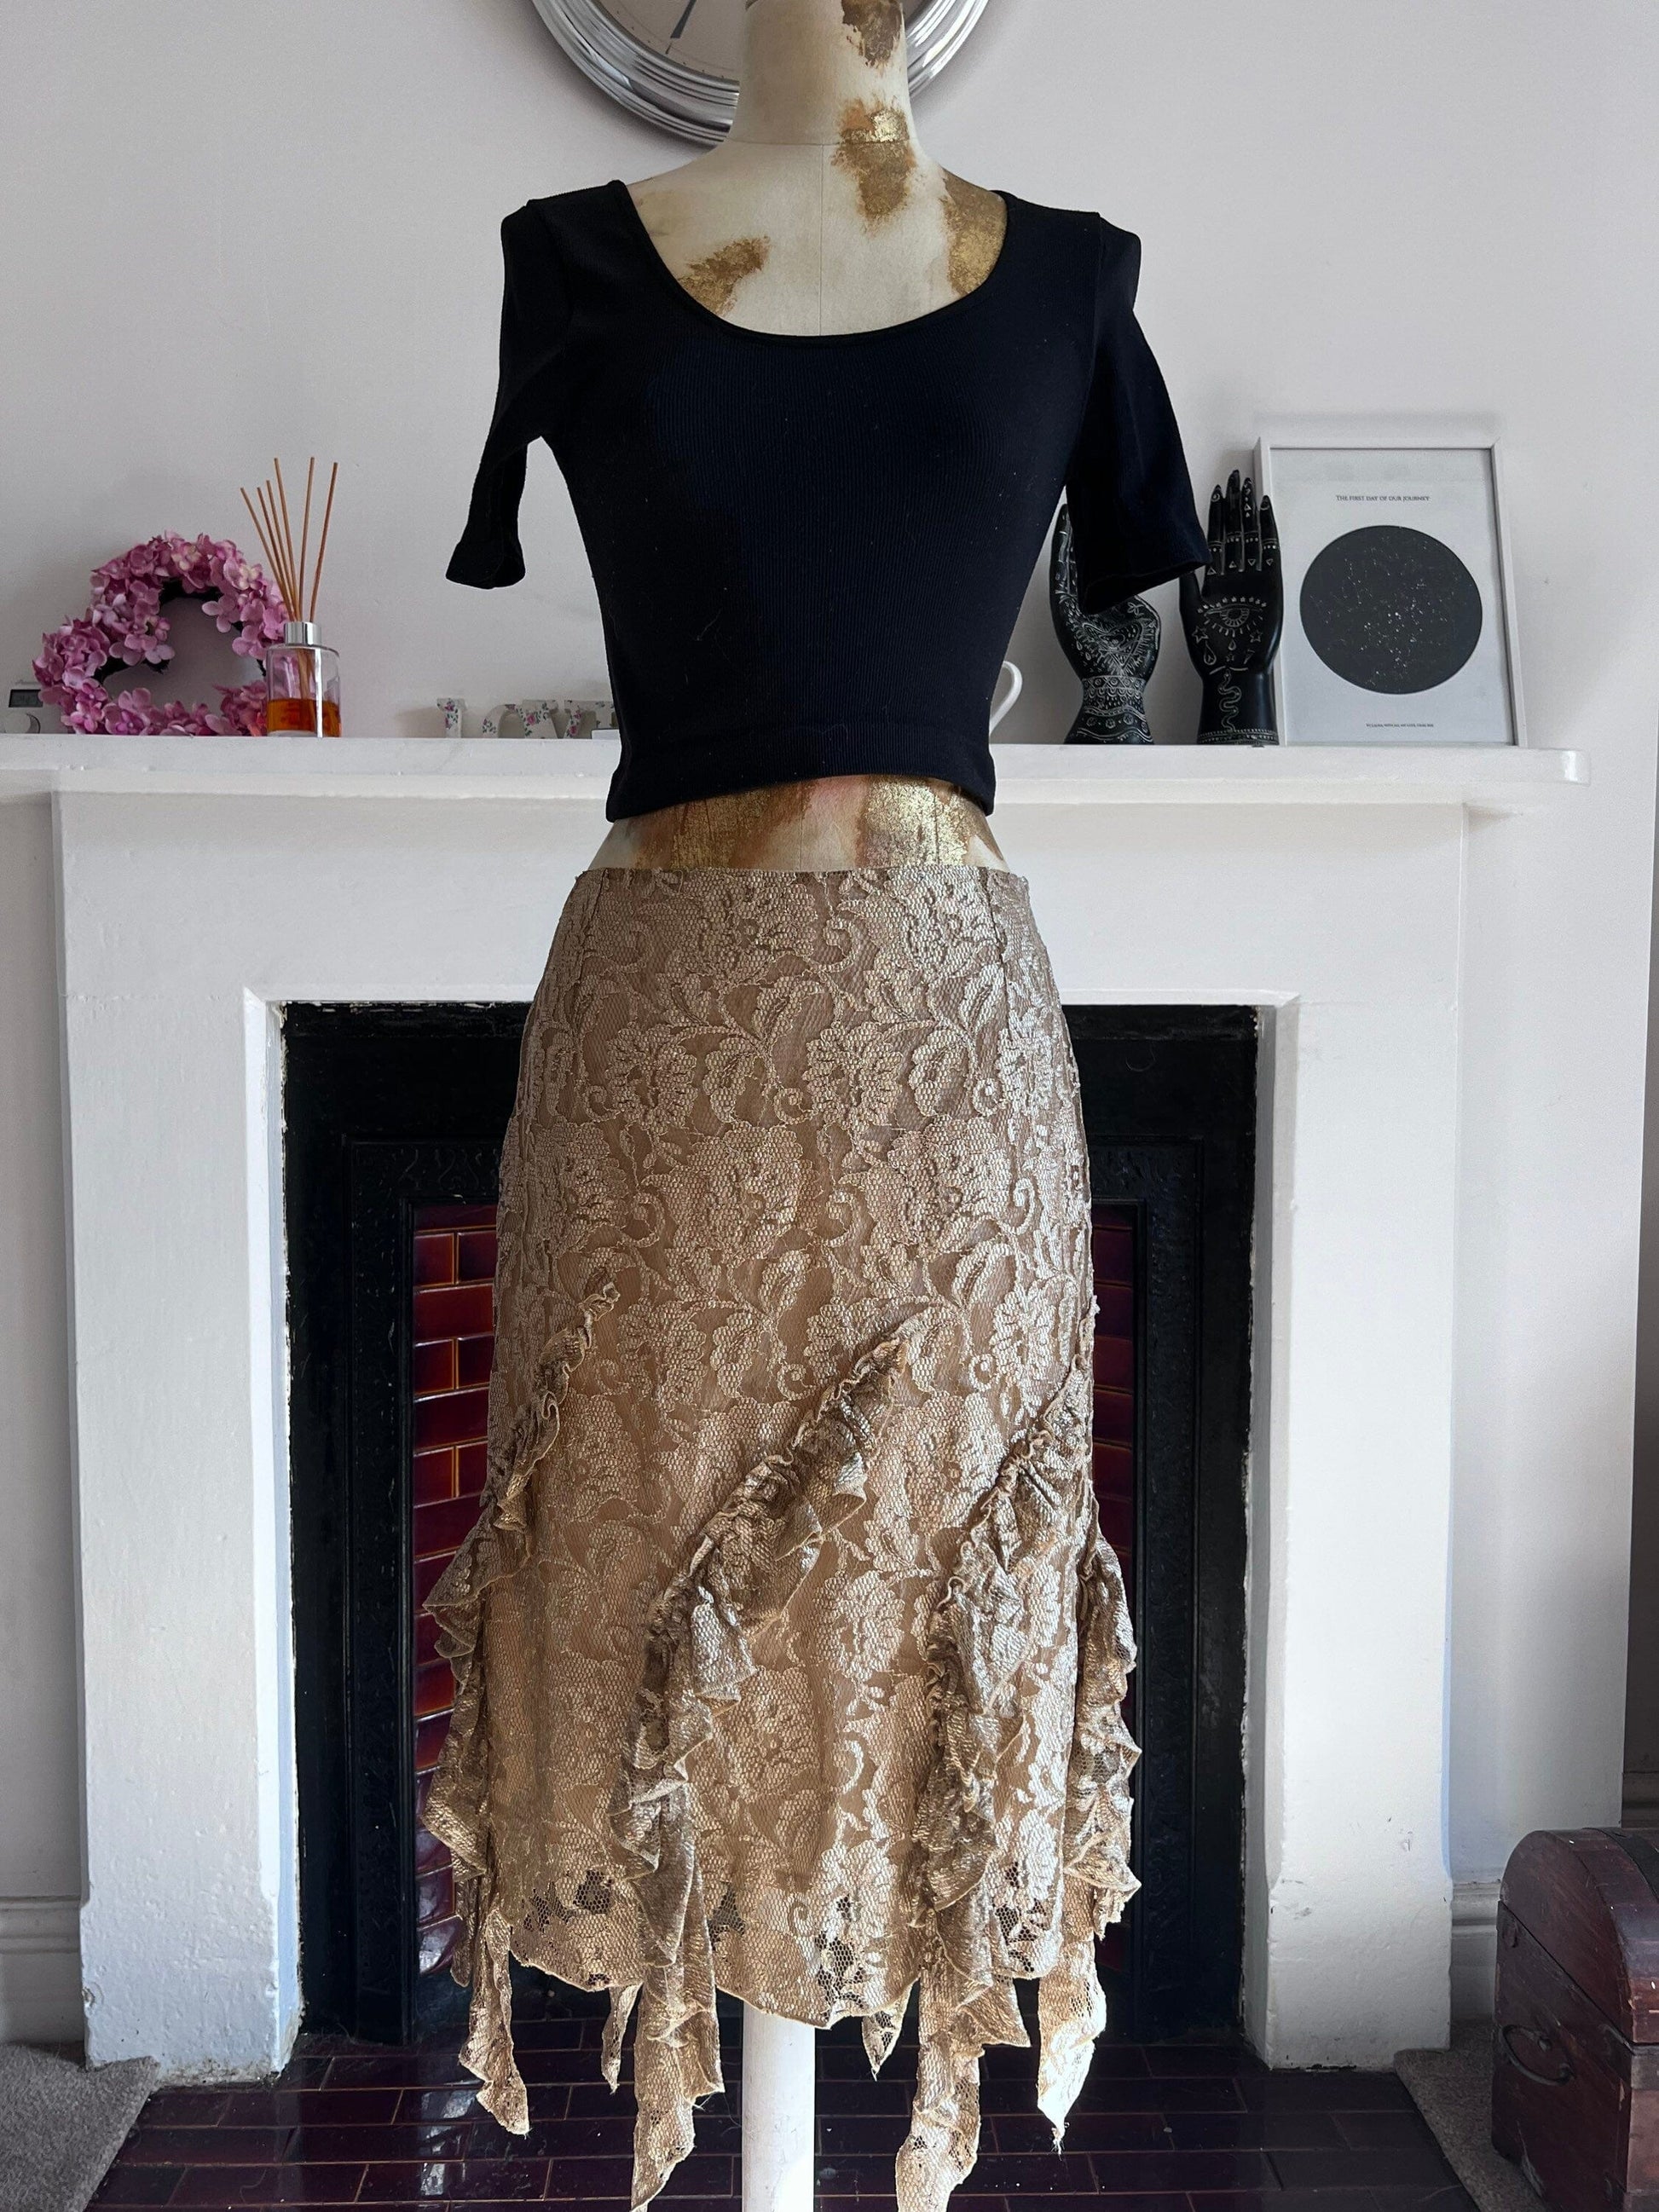 Vintage Gold Lace Evening Skirt - Karen Millen Stretch Lace UK12 Gold Stretch Lace Lined Skirt - Dipped Pixie Hem